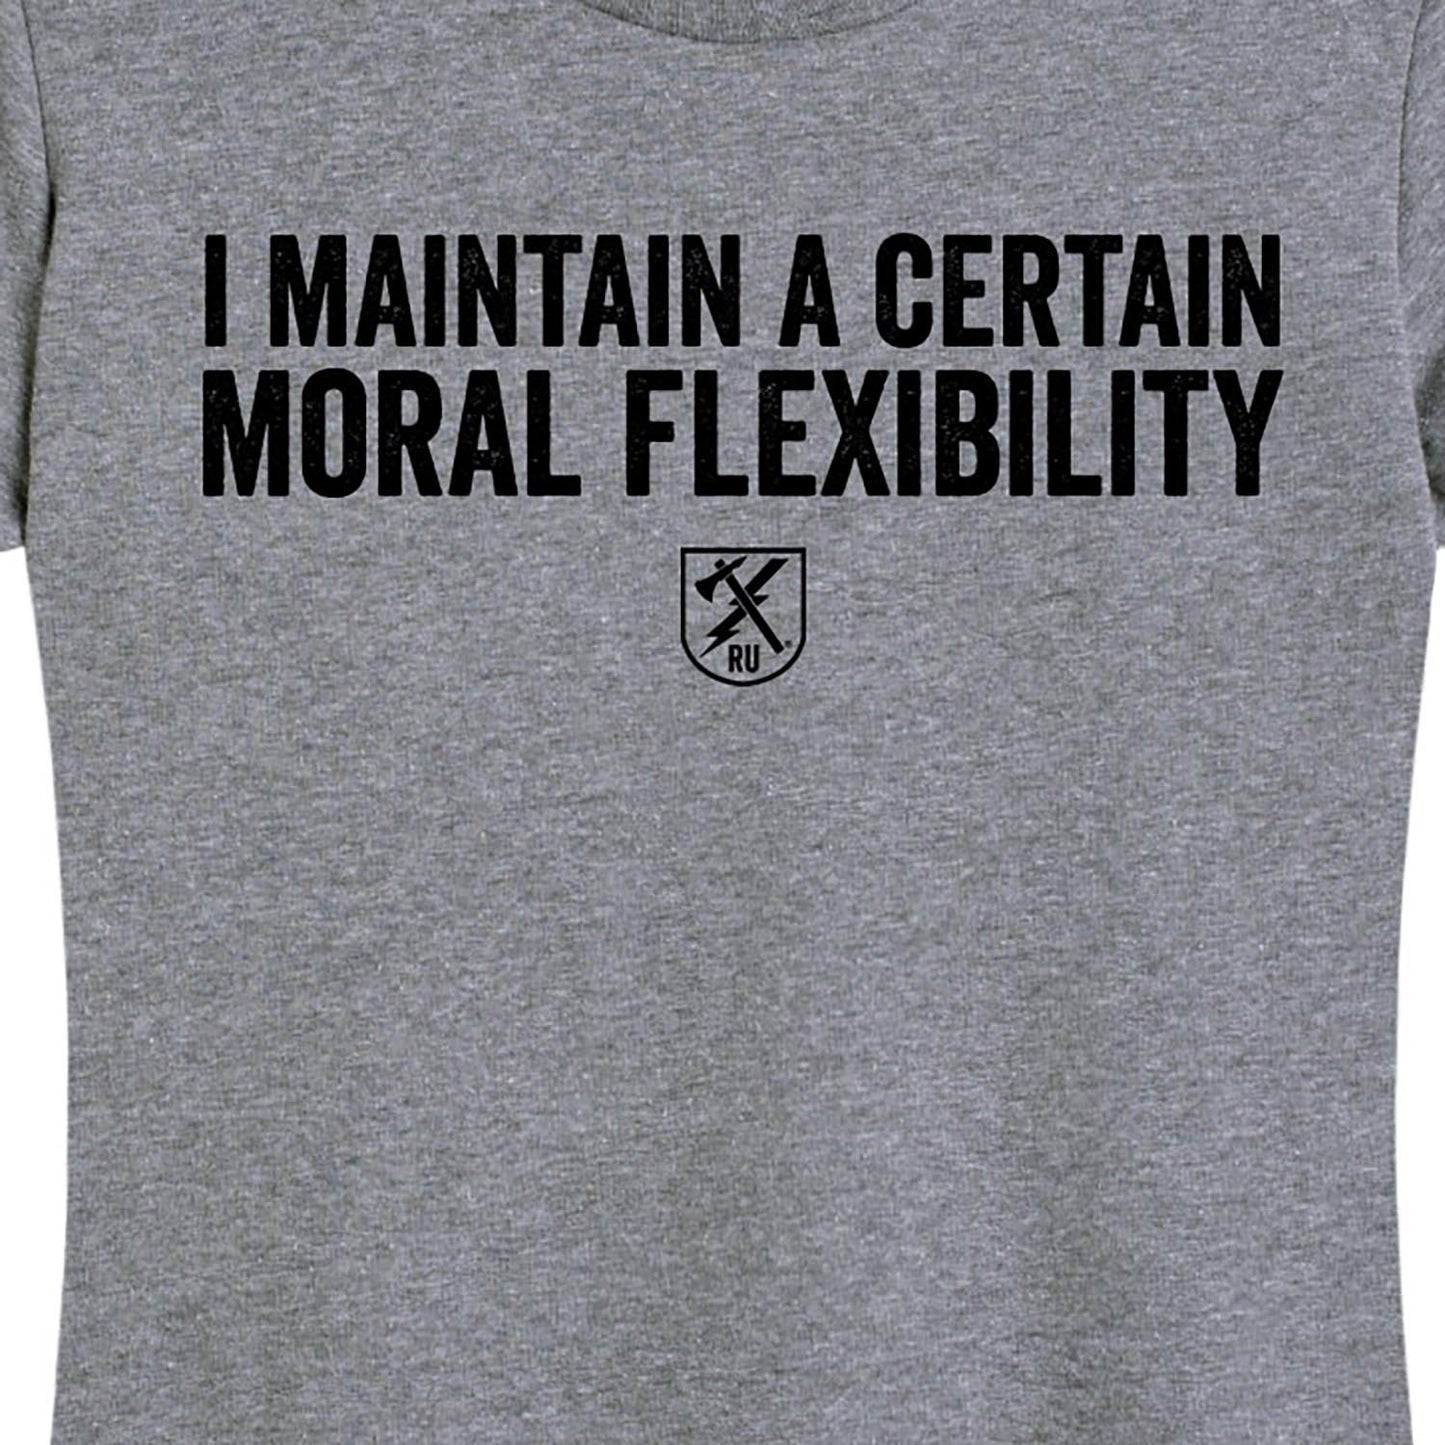 Women's Moral Flexibility Tee